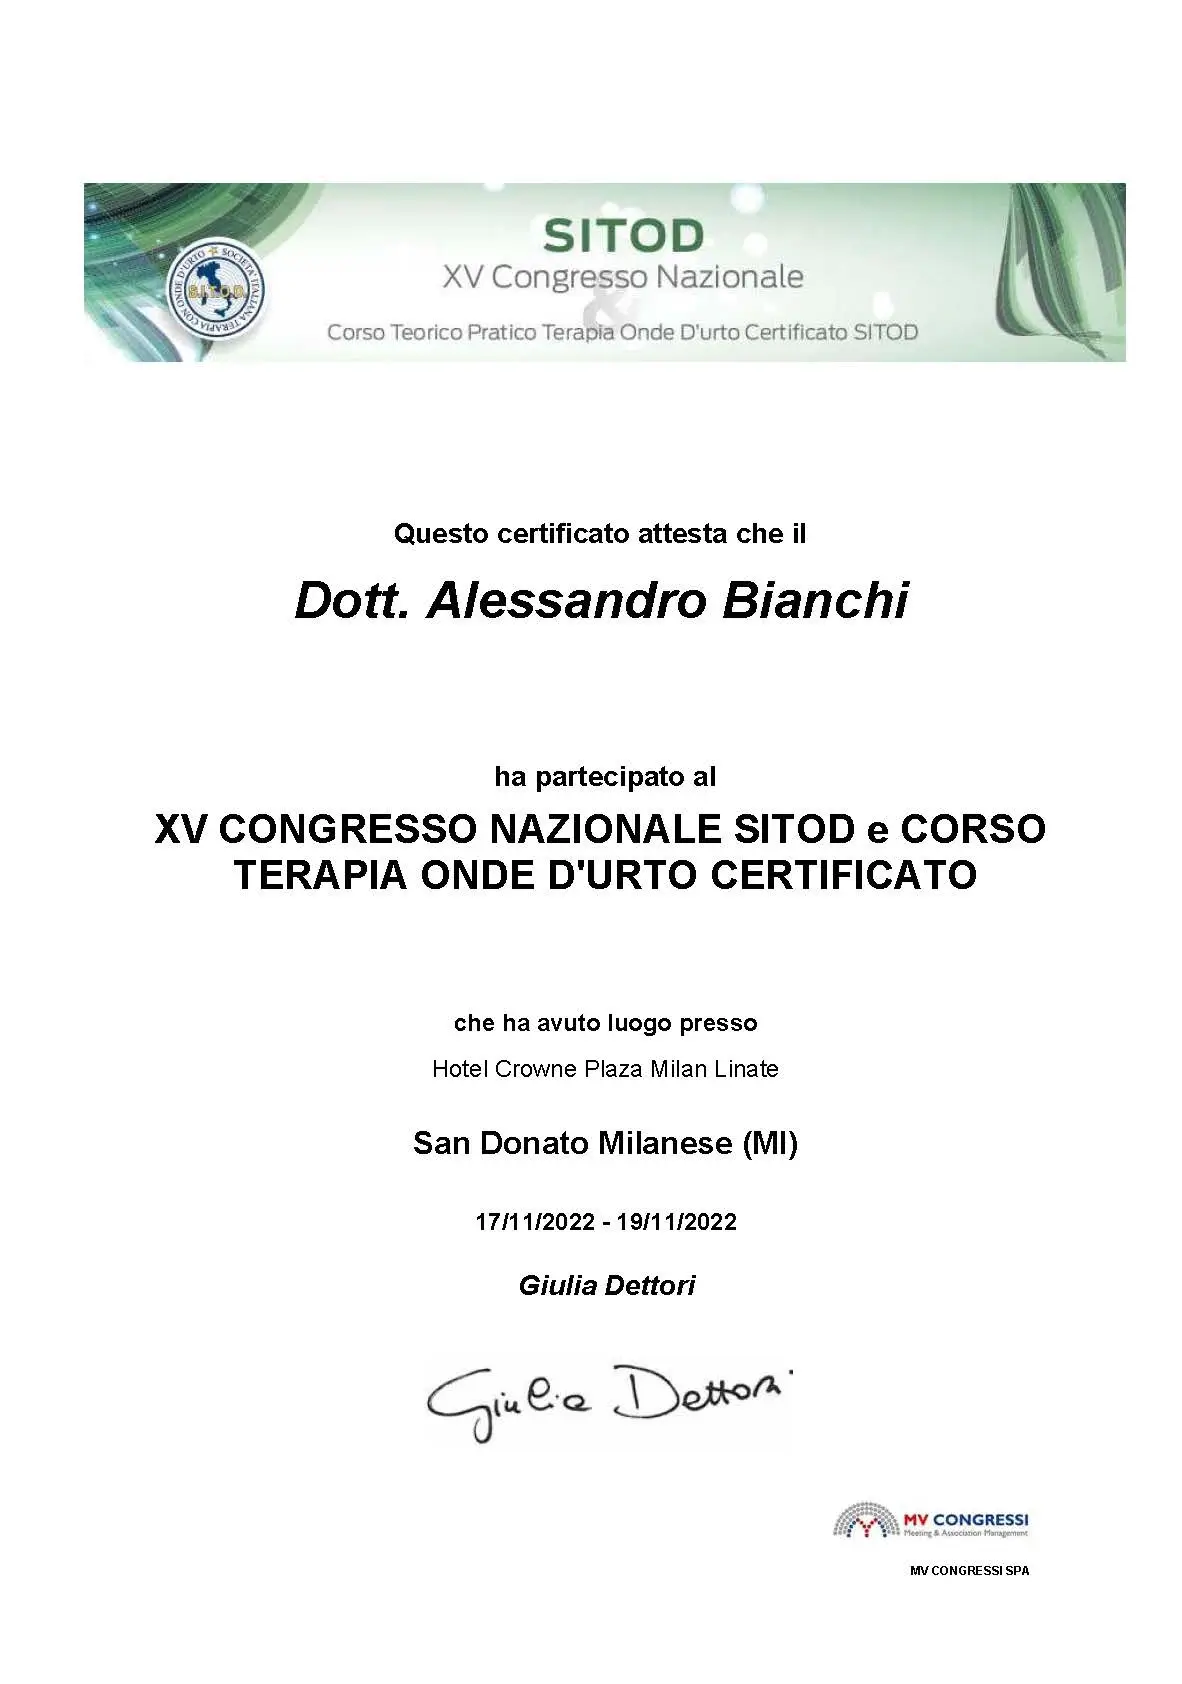 doctor certificate image